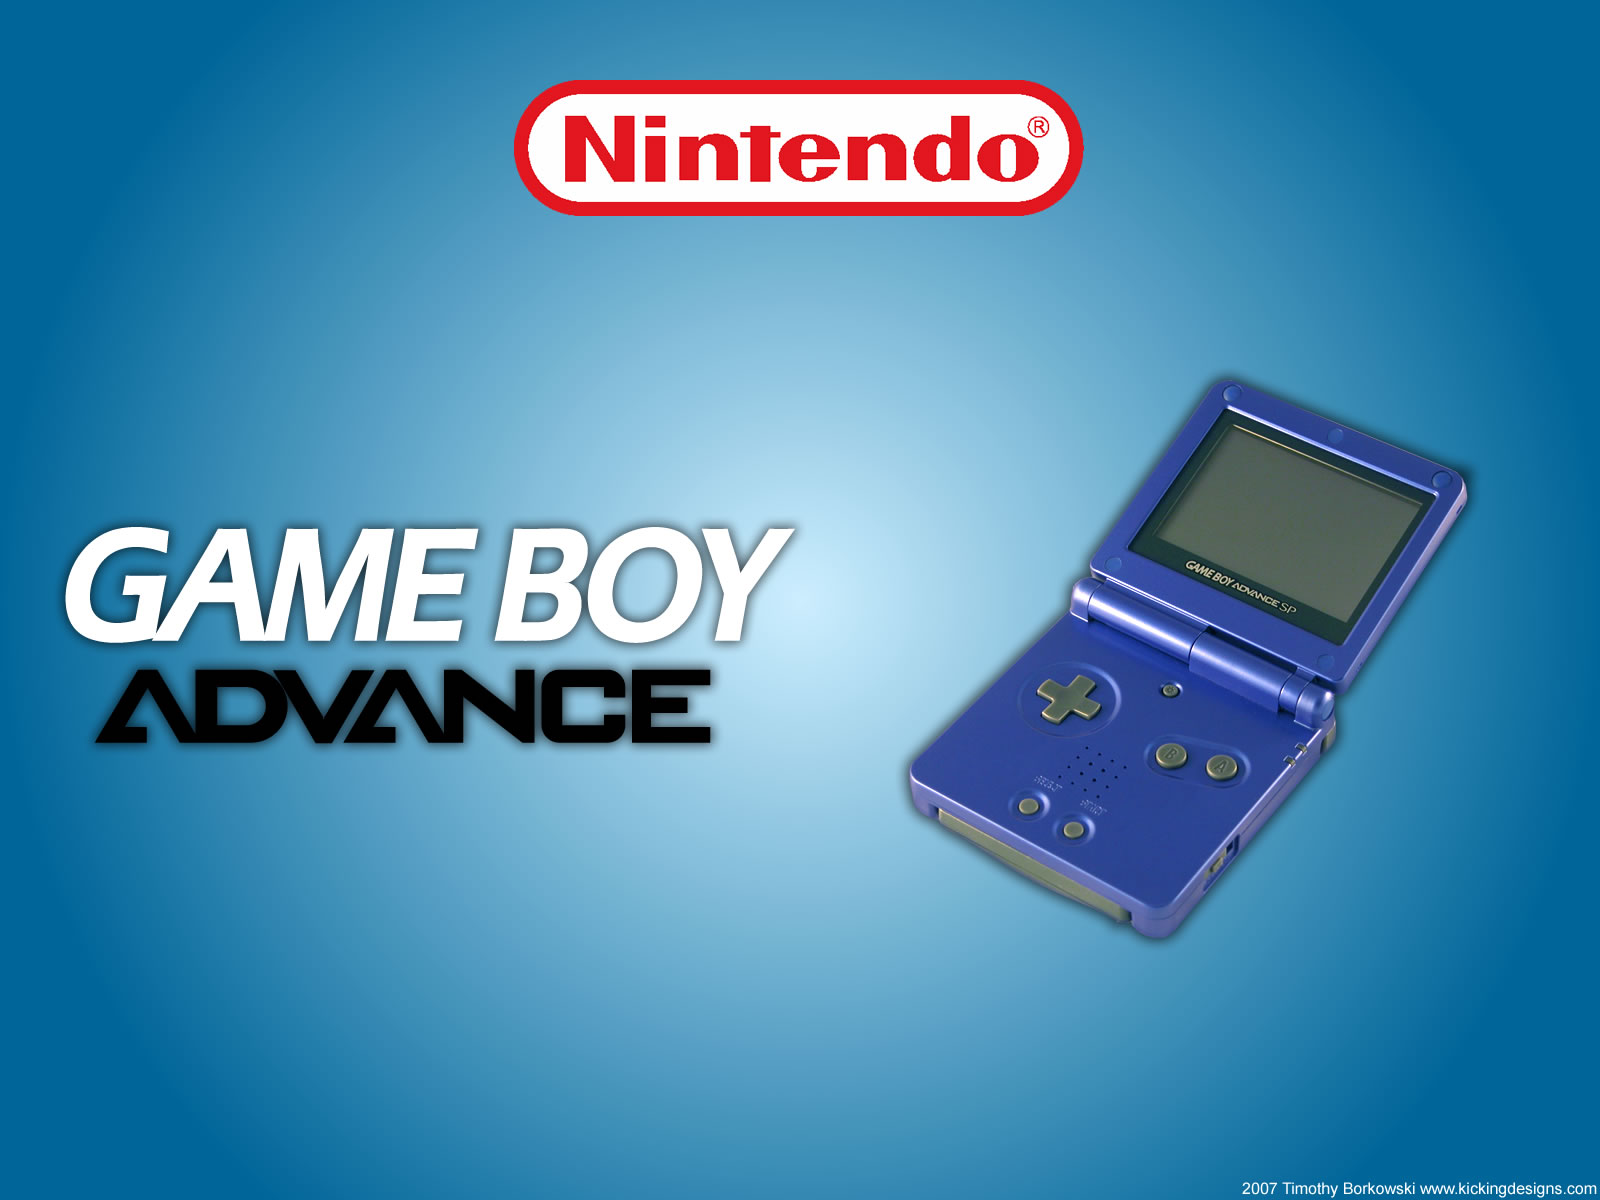 Game boy games download. Нинтендо геймбой Advance. Game boy Advance SP игры. Nintendo game boy Advance игры. Nintendo game boy Advance SP.